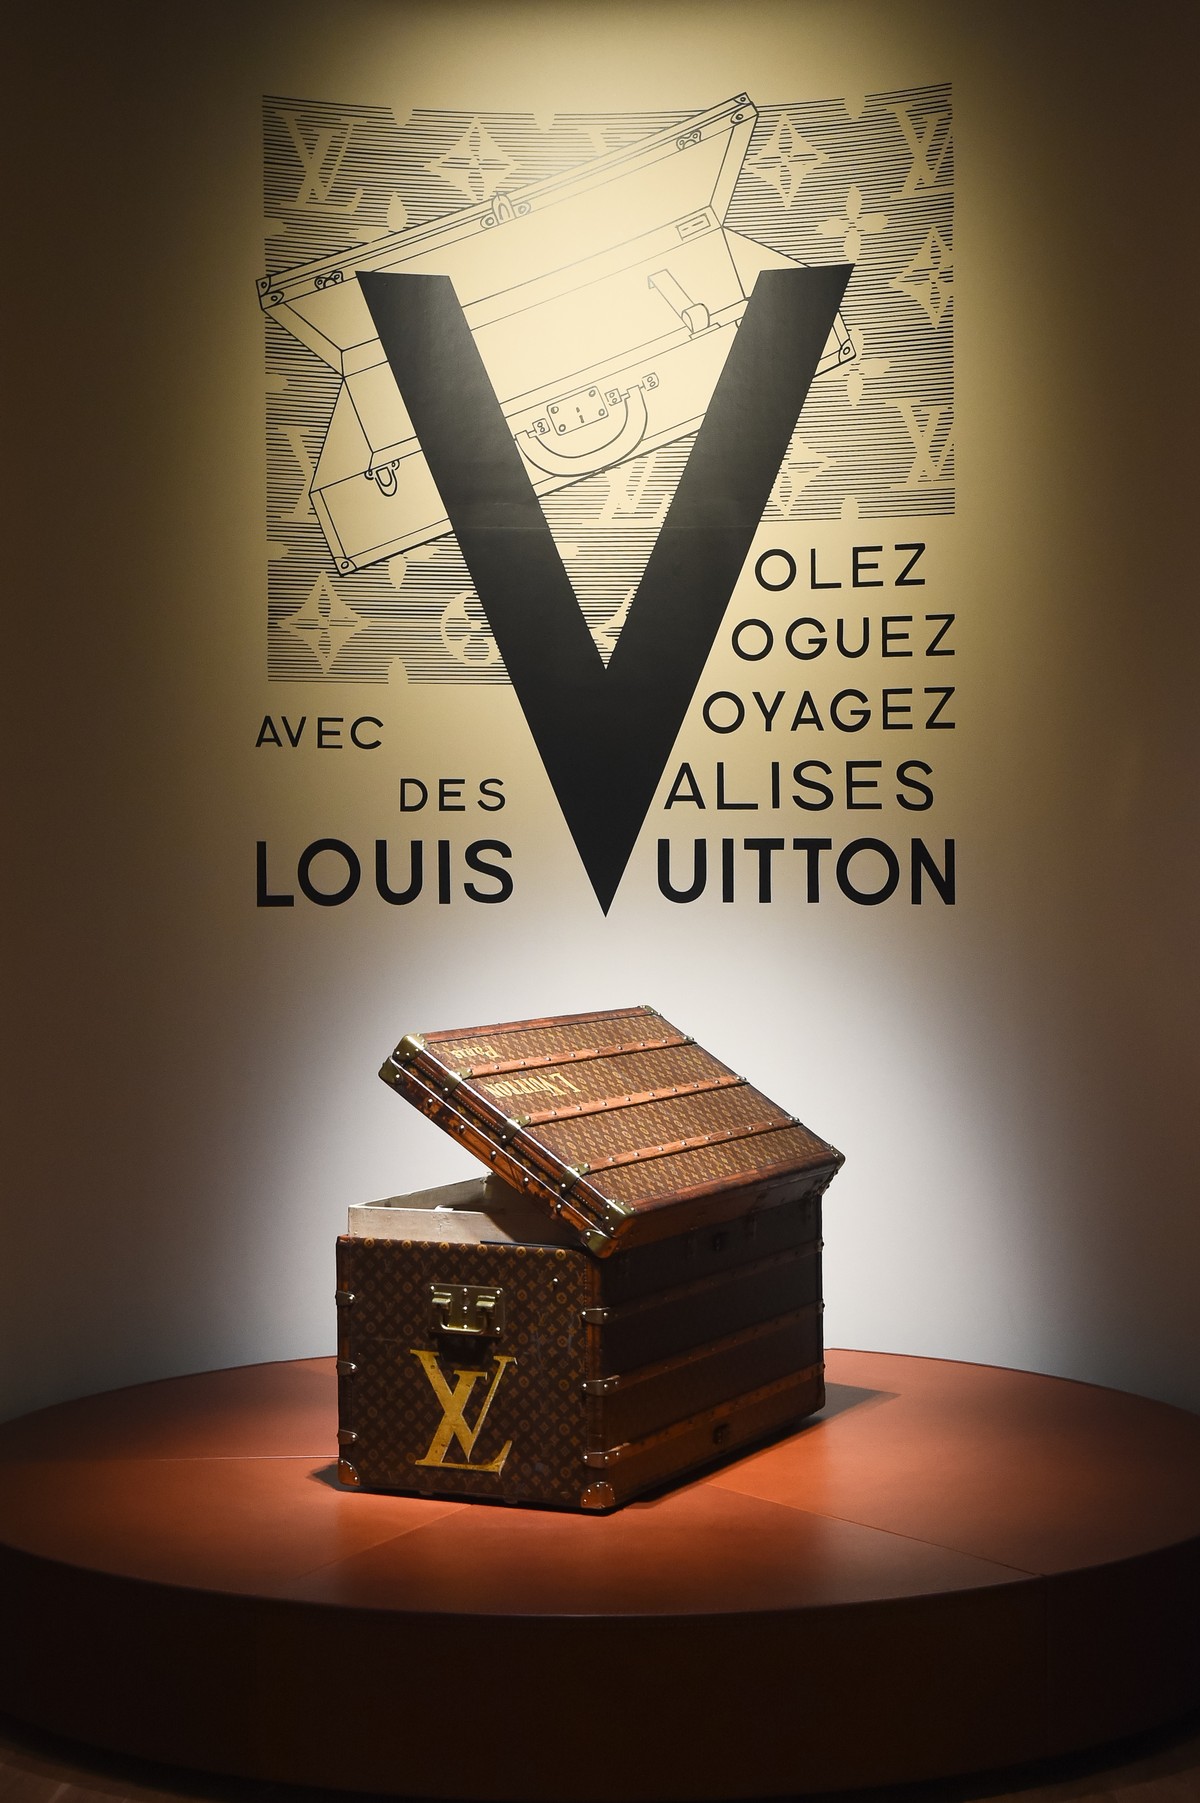 How a Louis Vuitton Trunk is Built